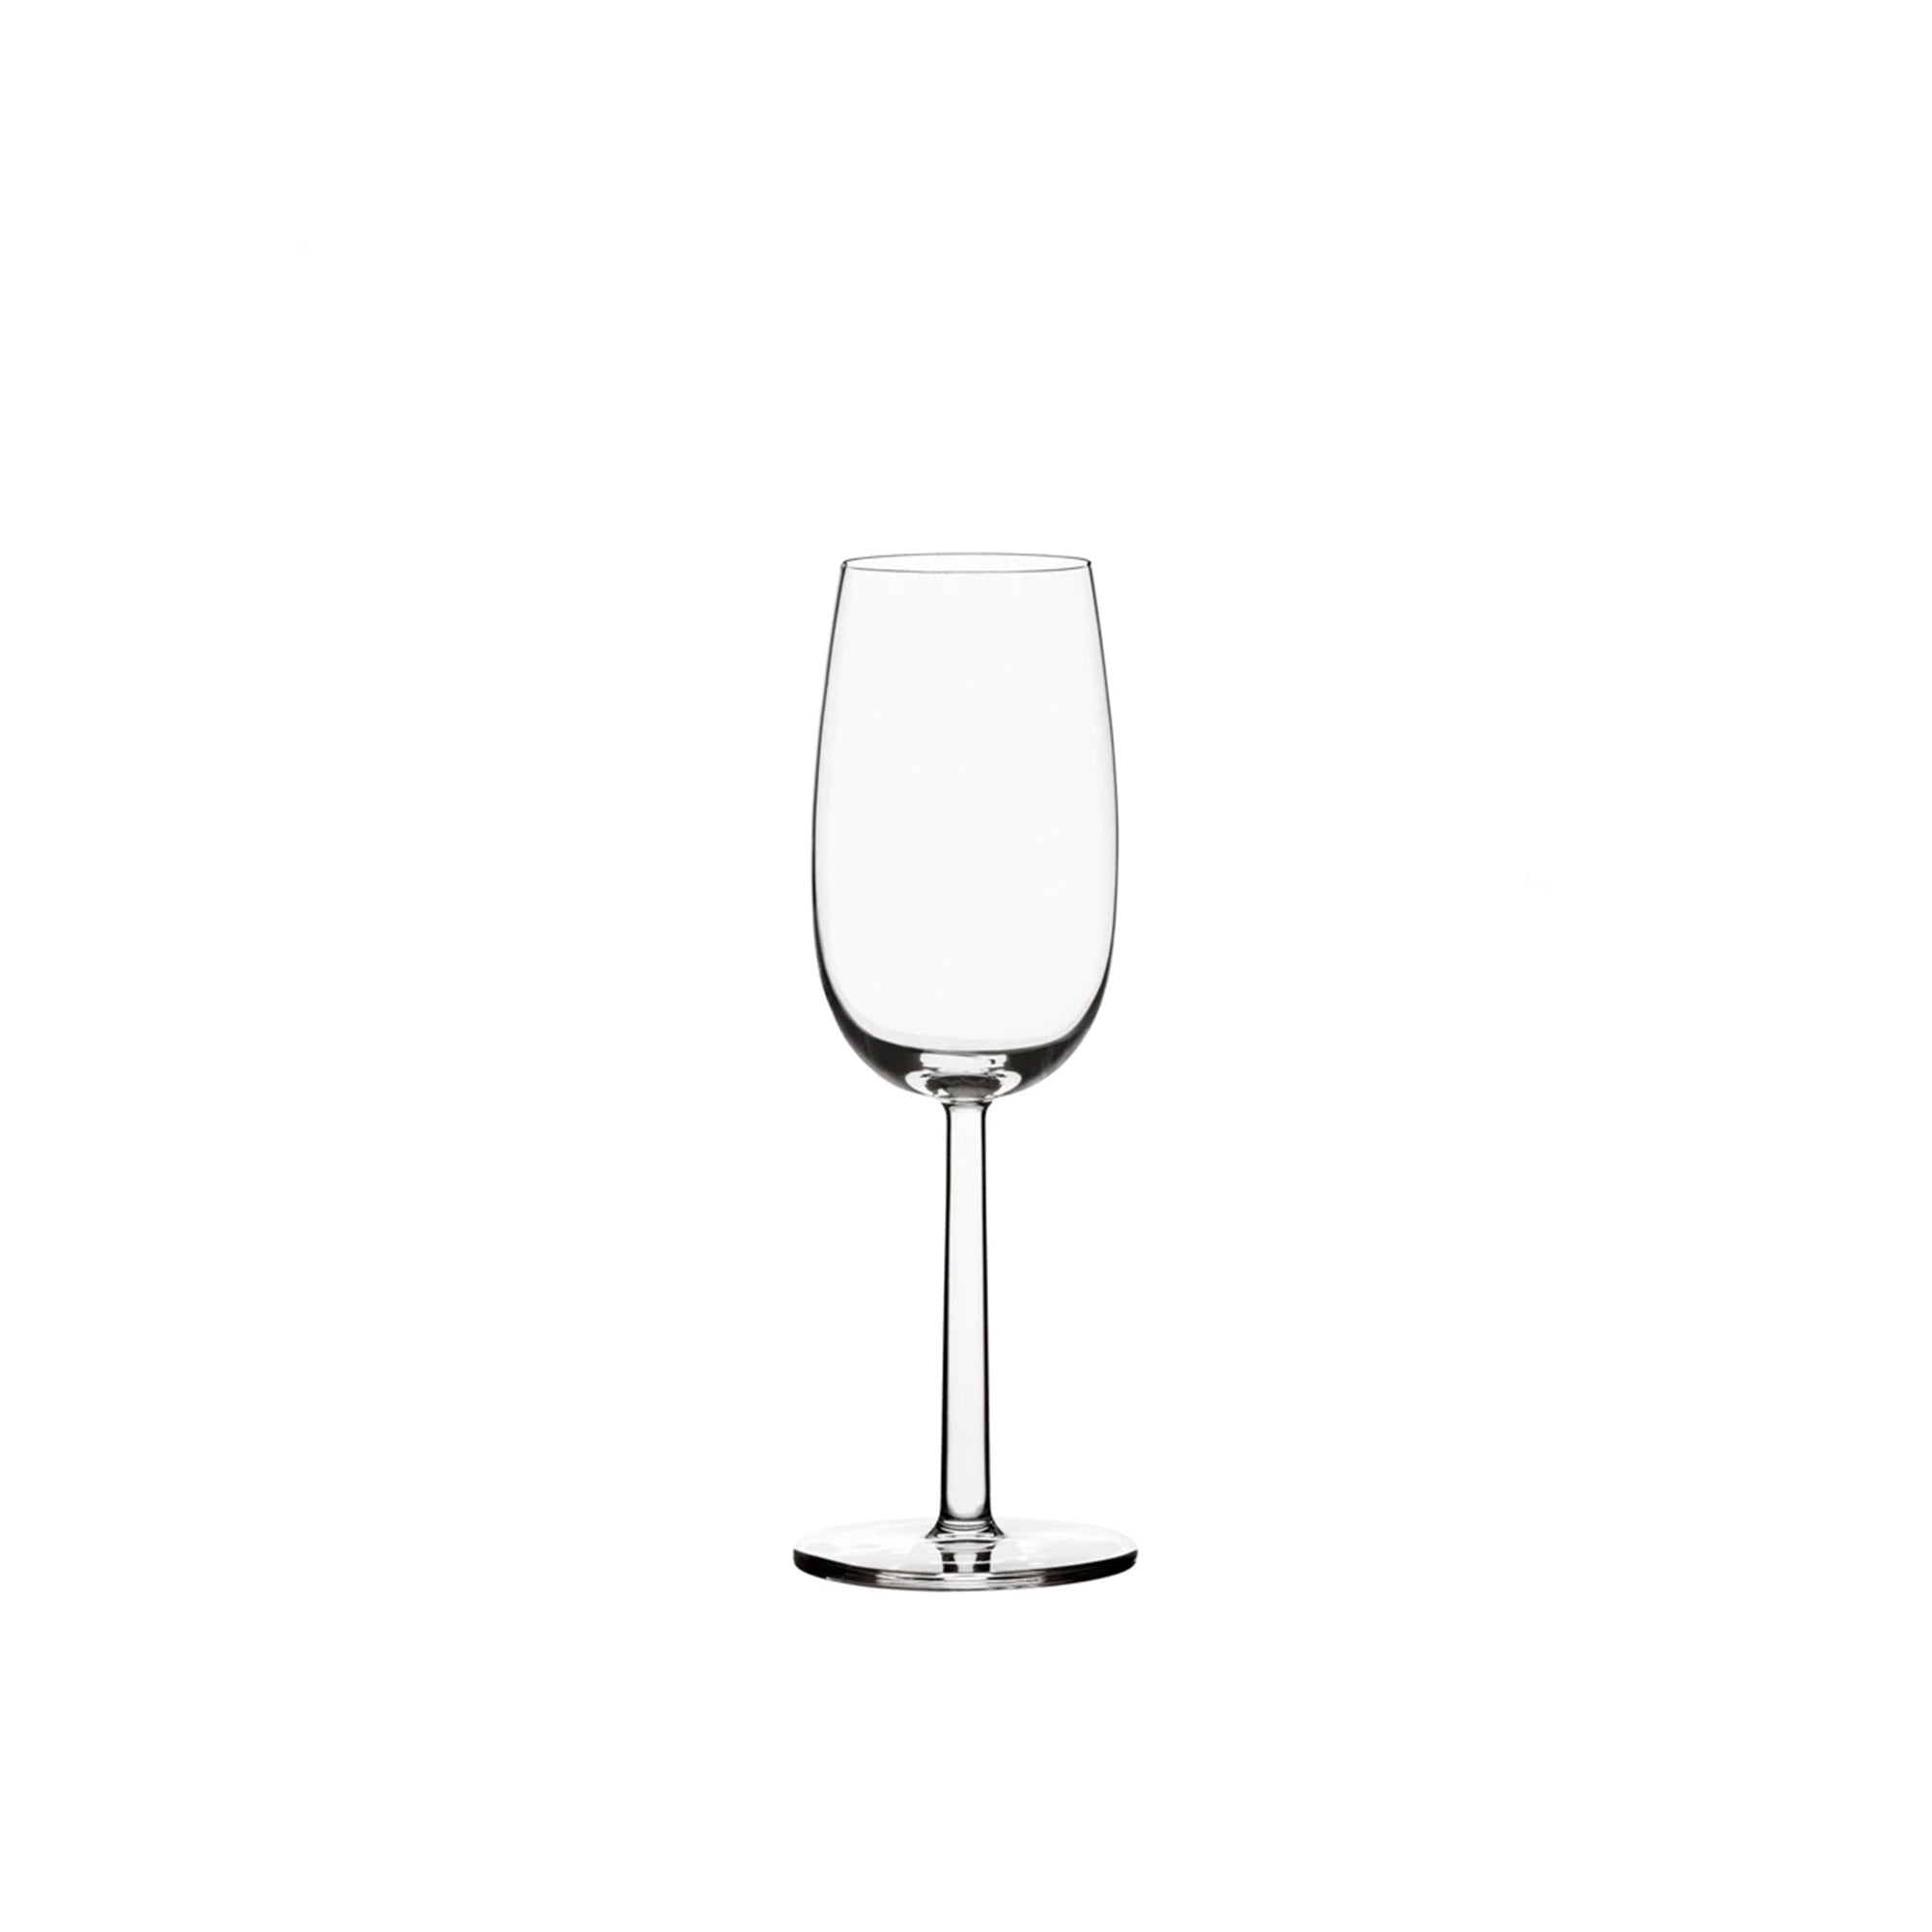 Raami Sparkling Wine Glass 8oz, Set of 2